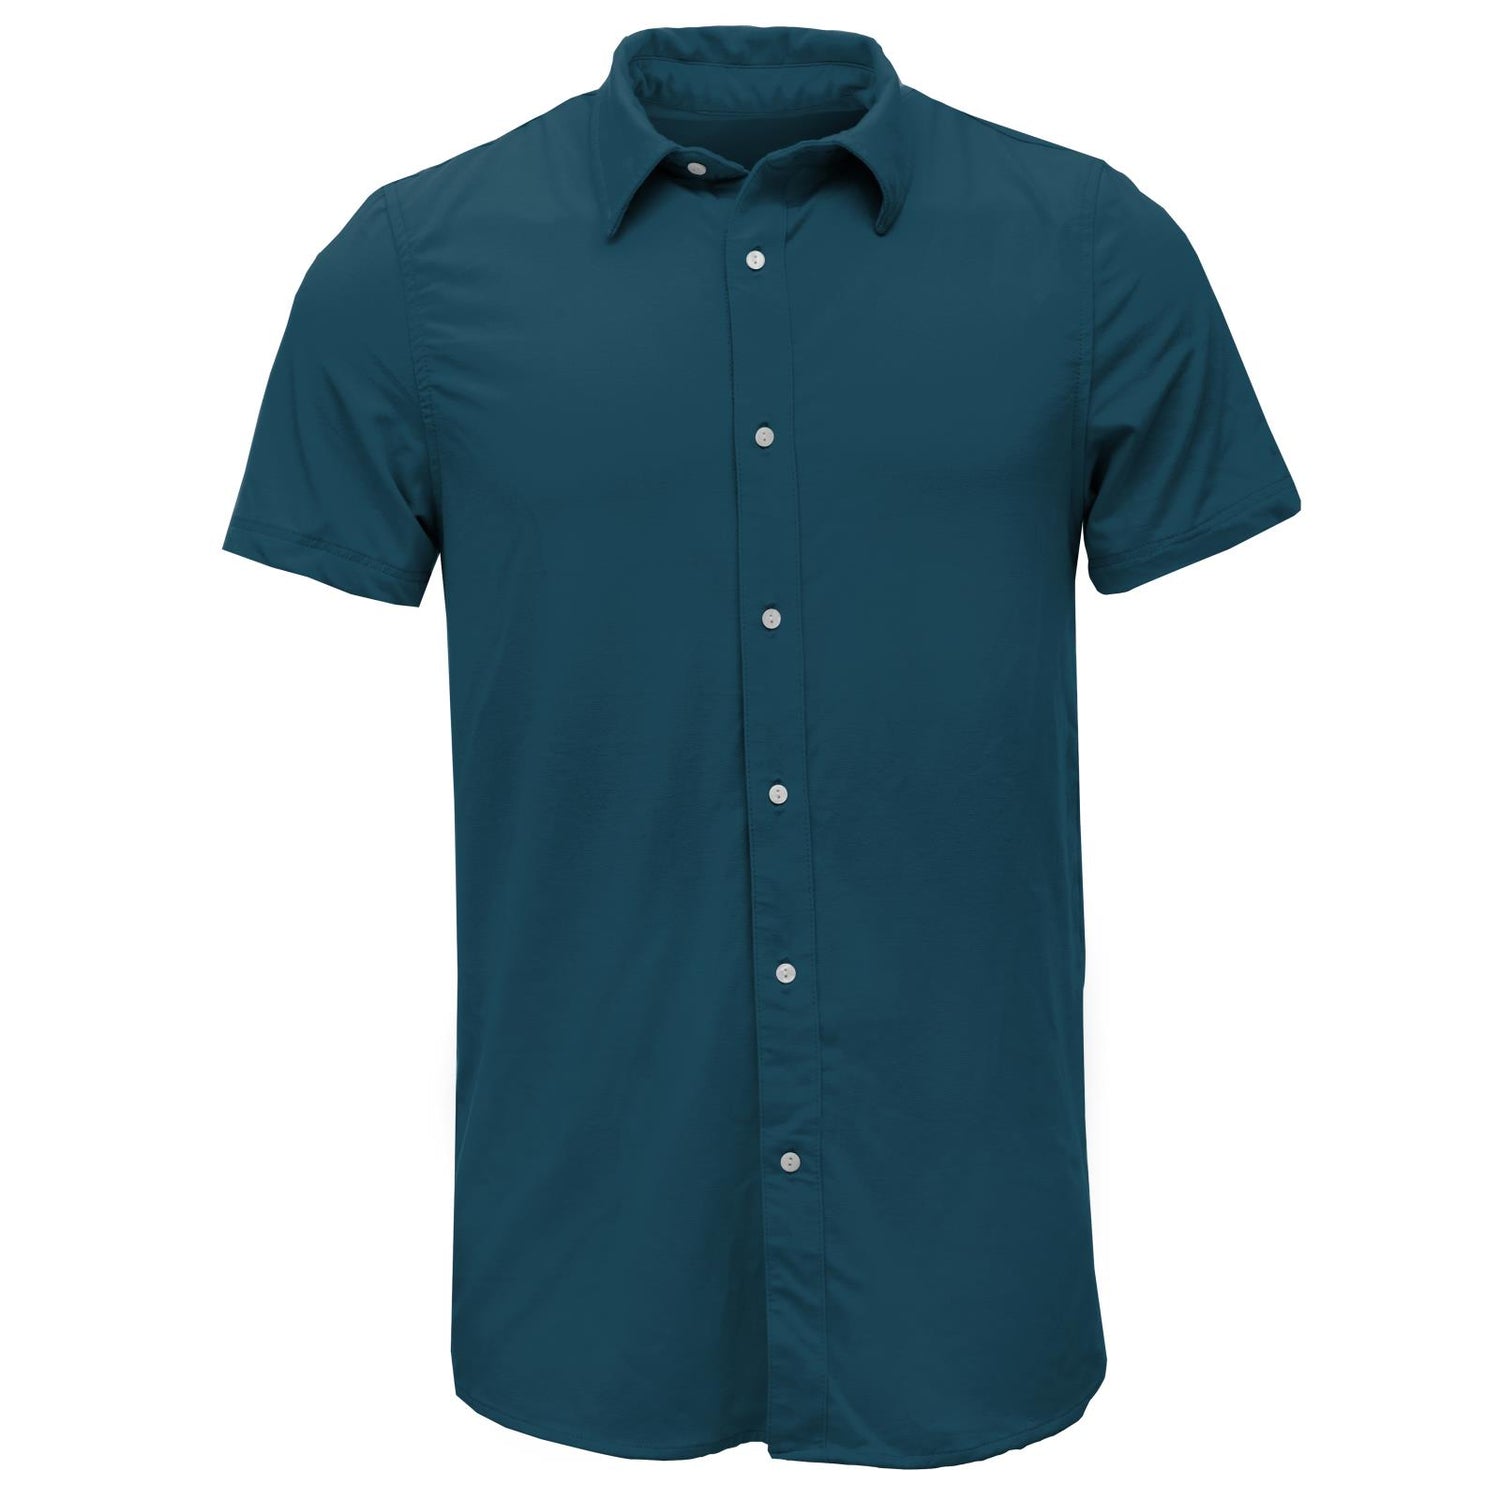 Men's Short Sleeve Woven Button Down Shirt in Peacock